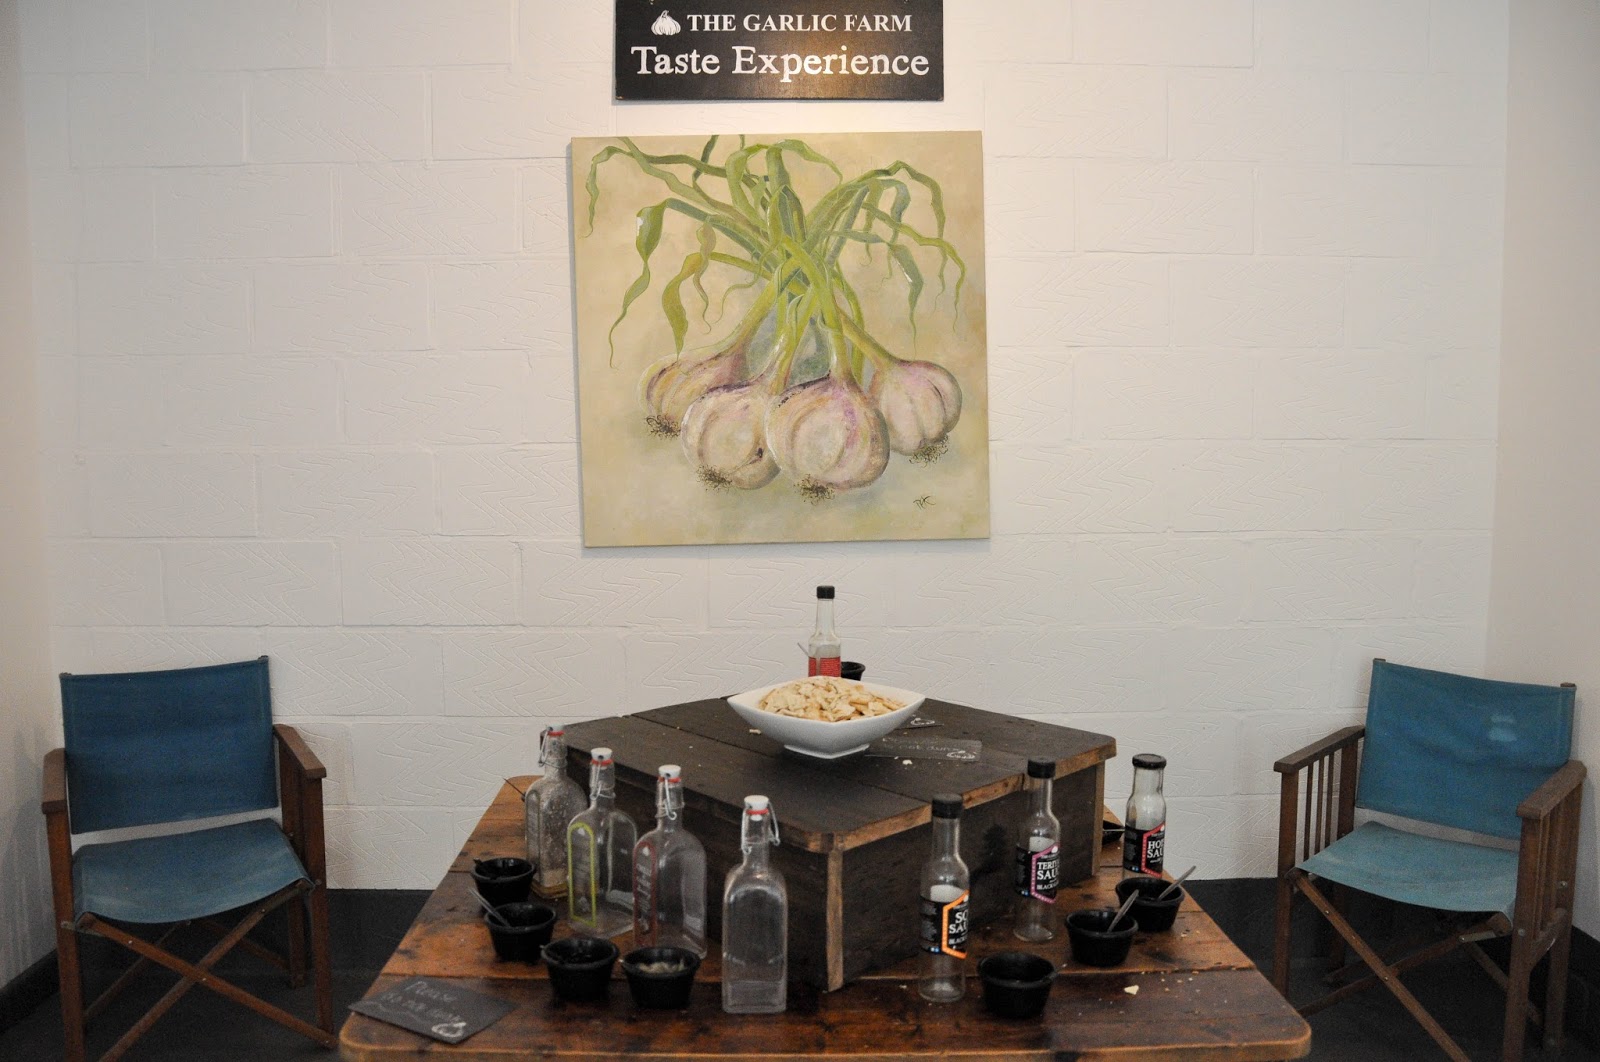 Taste Experience, The Garlic Farm, Isle of Wight, UK